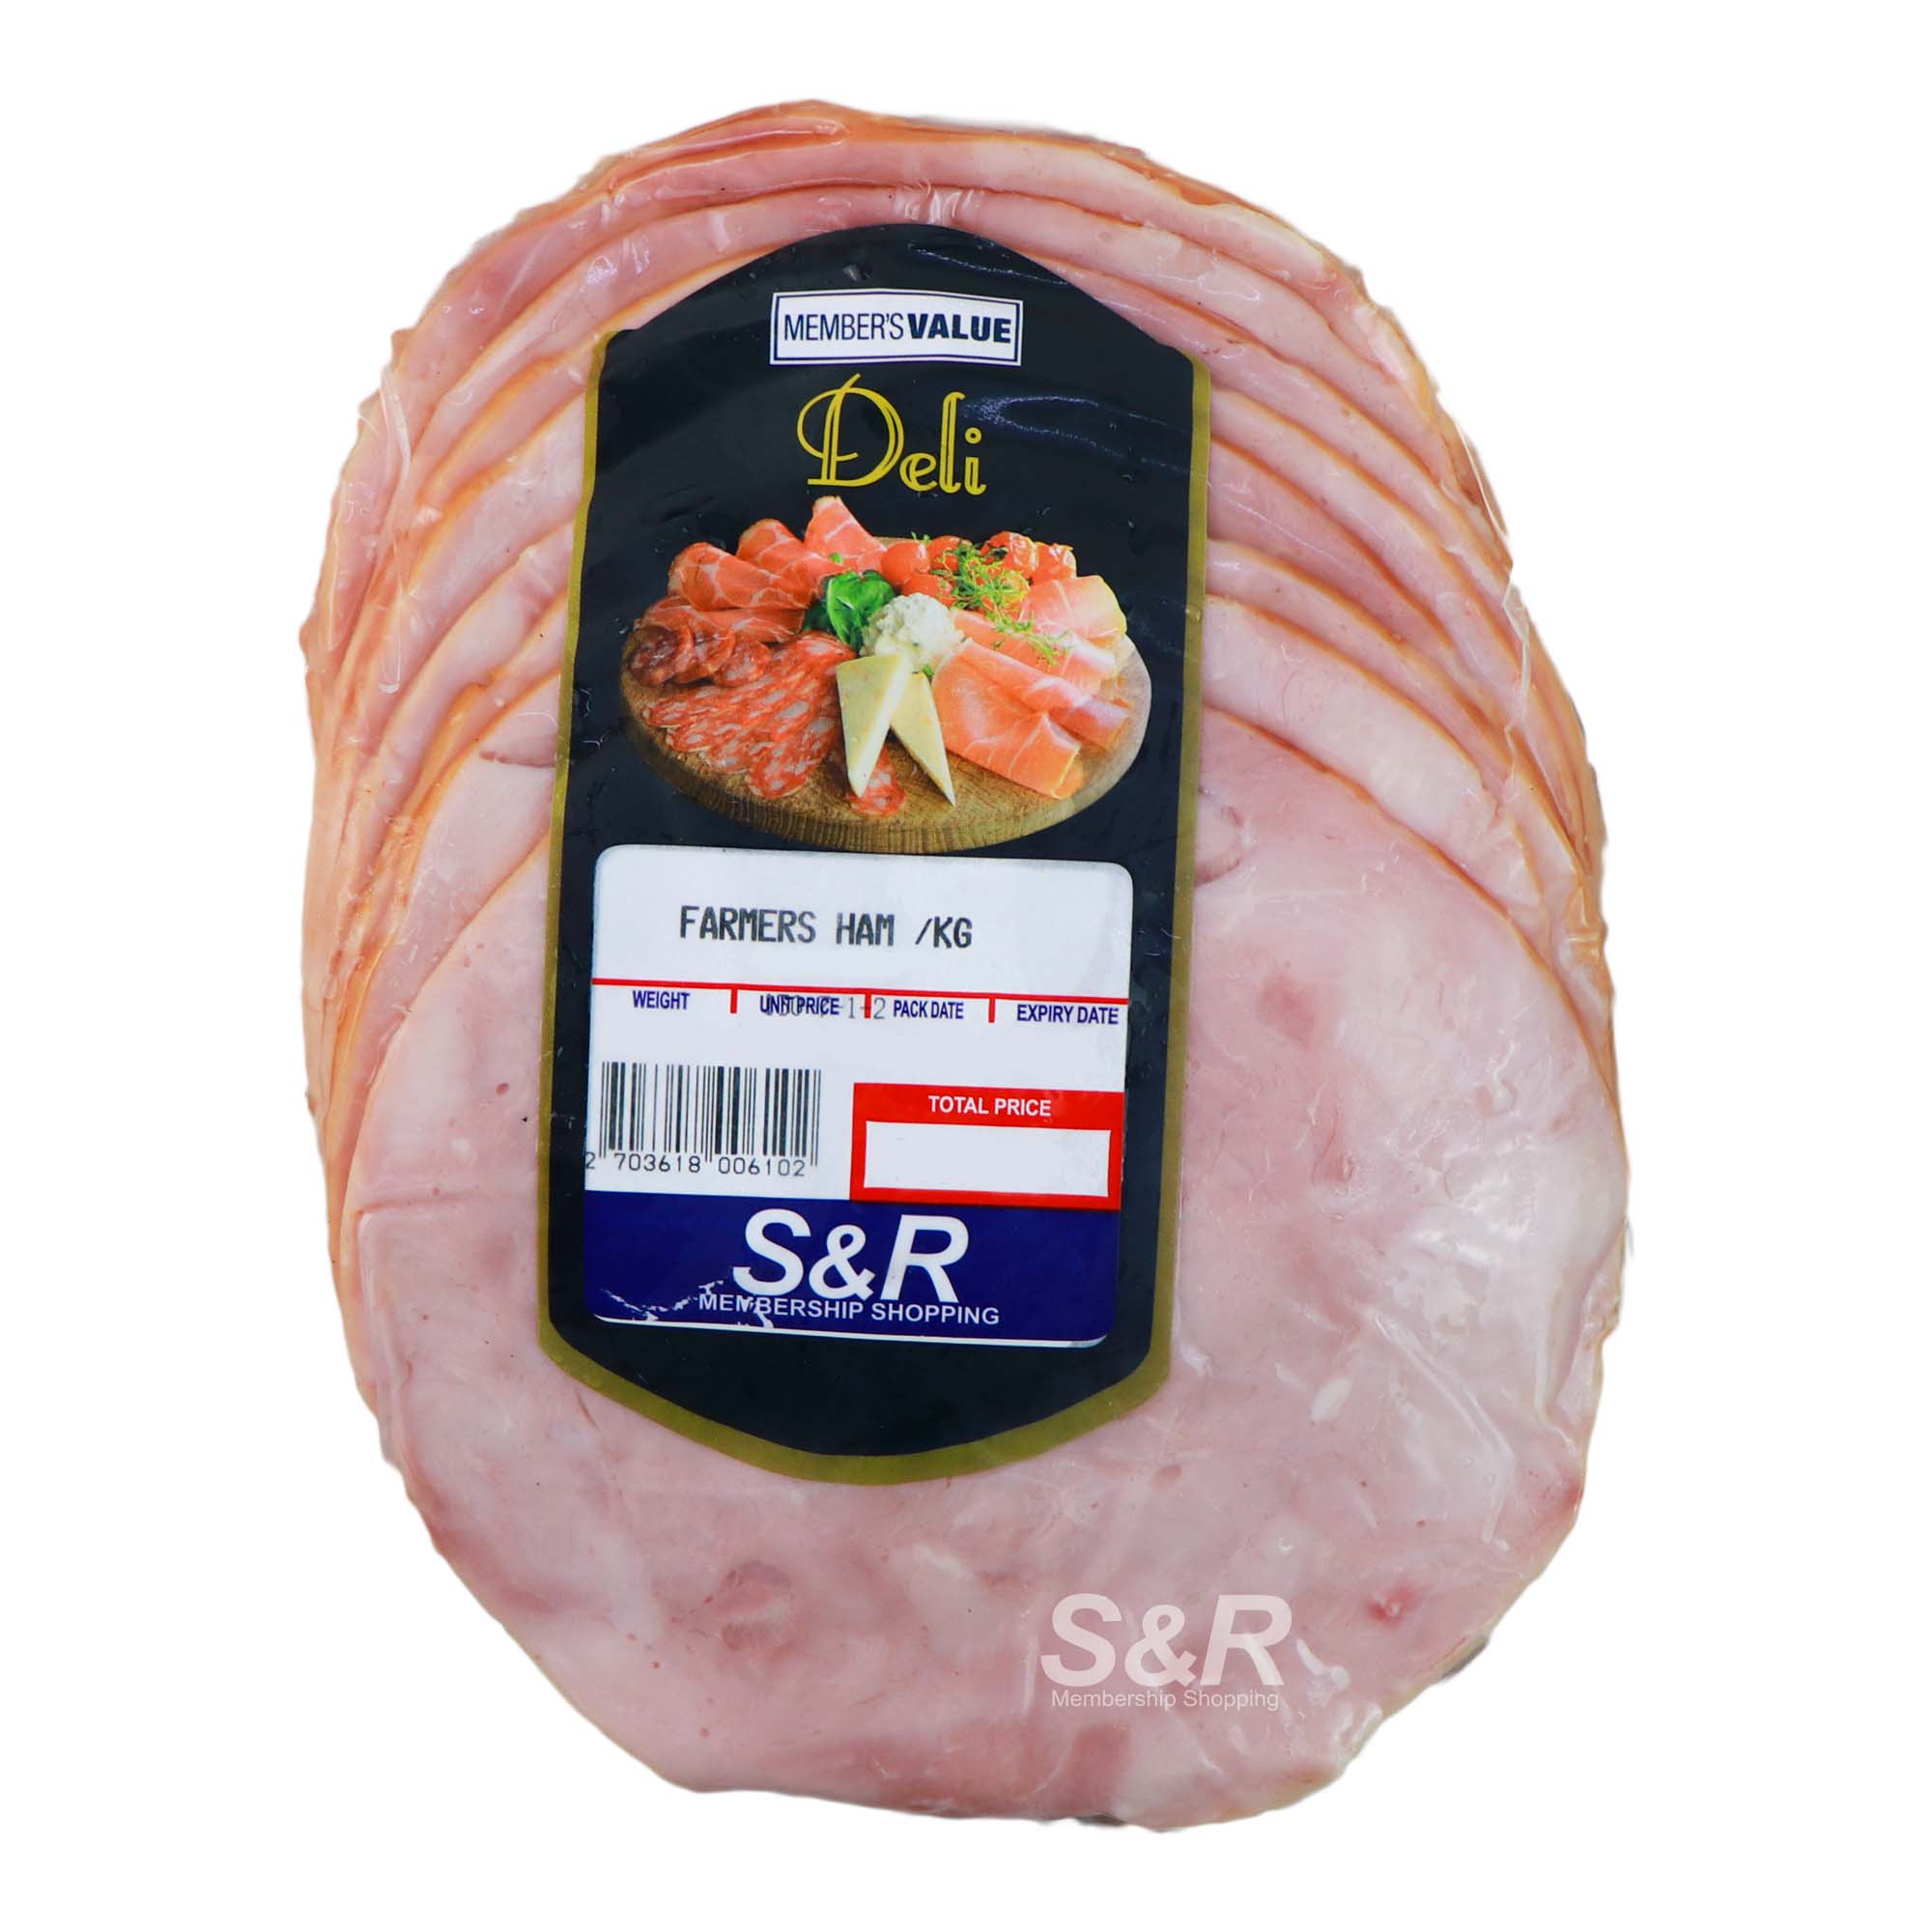 Member's Value Deli Farmers Ham approx. 1kg